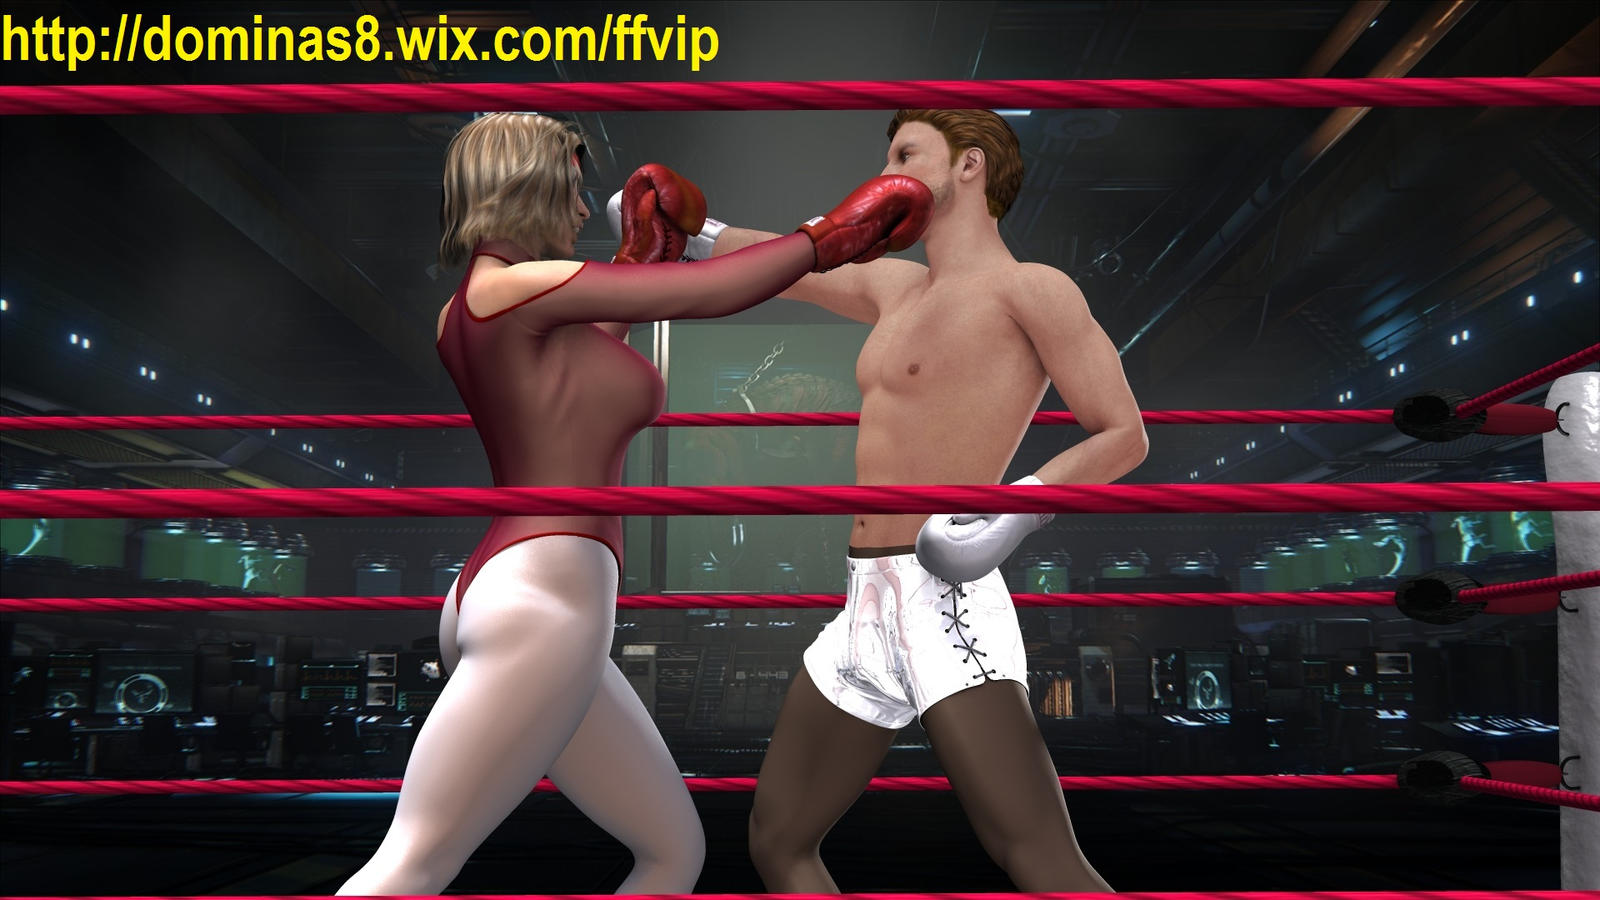 mixed_boxing_seethrough_leotard_fighting_femdom_by_q1911-d8q3yve.jpg